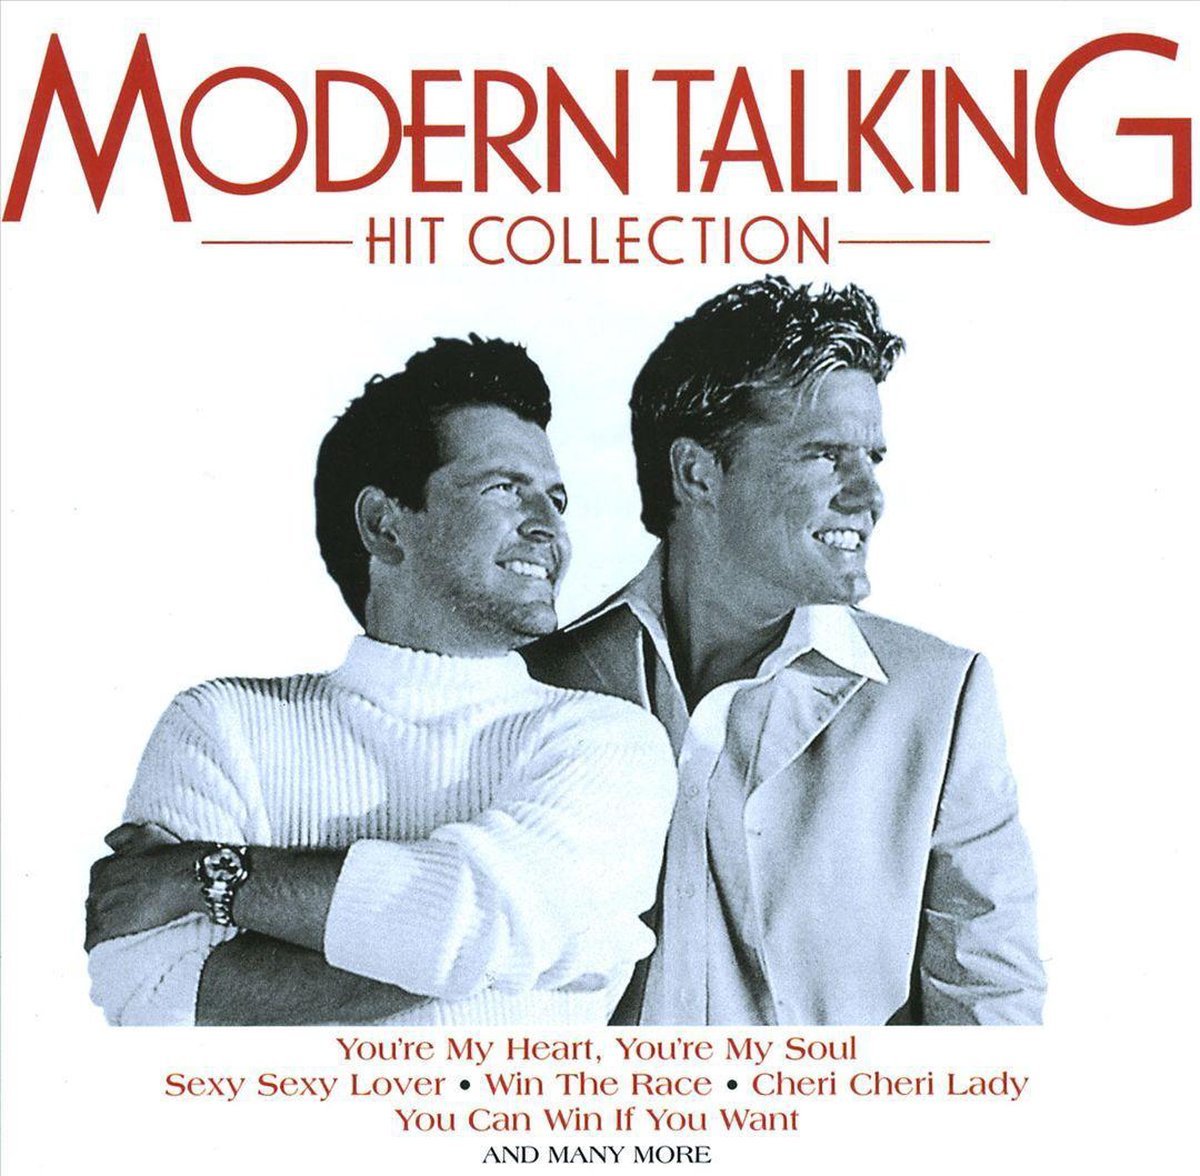 Modern talking альбомы слушать. Группа Modern talking. Modern talking America обложка. Modern talking обложки альбомов. Modern talking Hits collection.